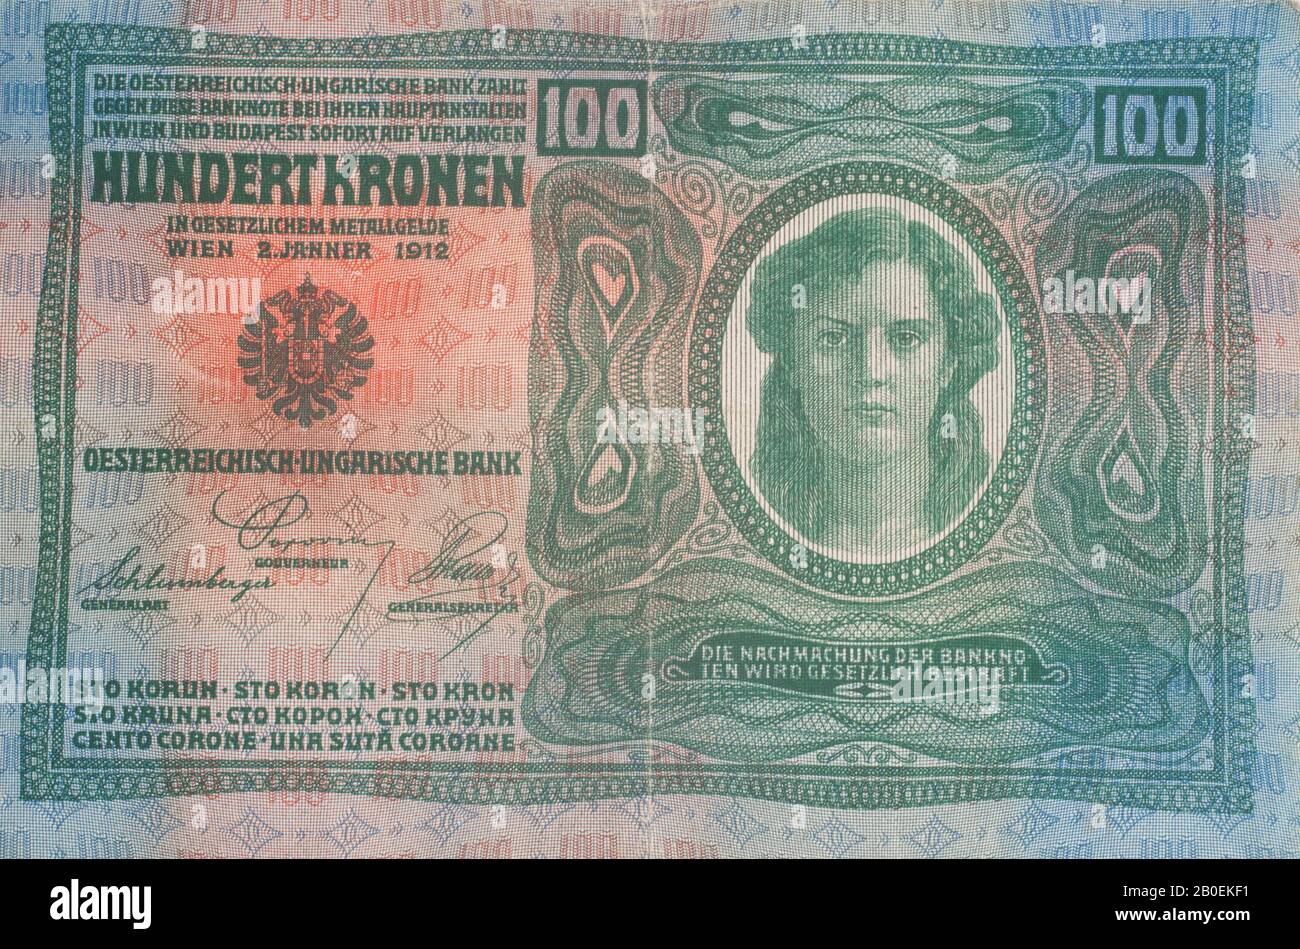 A 100 Kronen Austria Hungry 1912 bank note Stock Photo